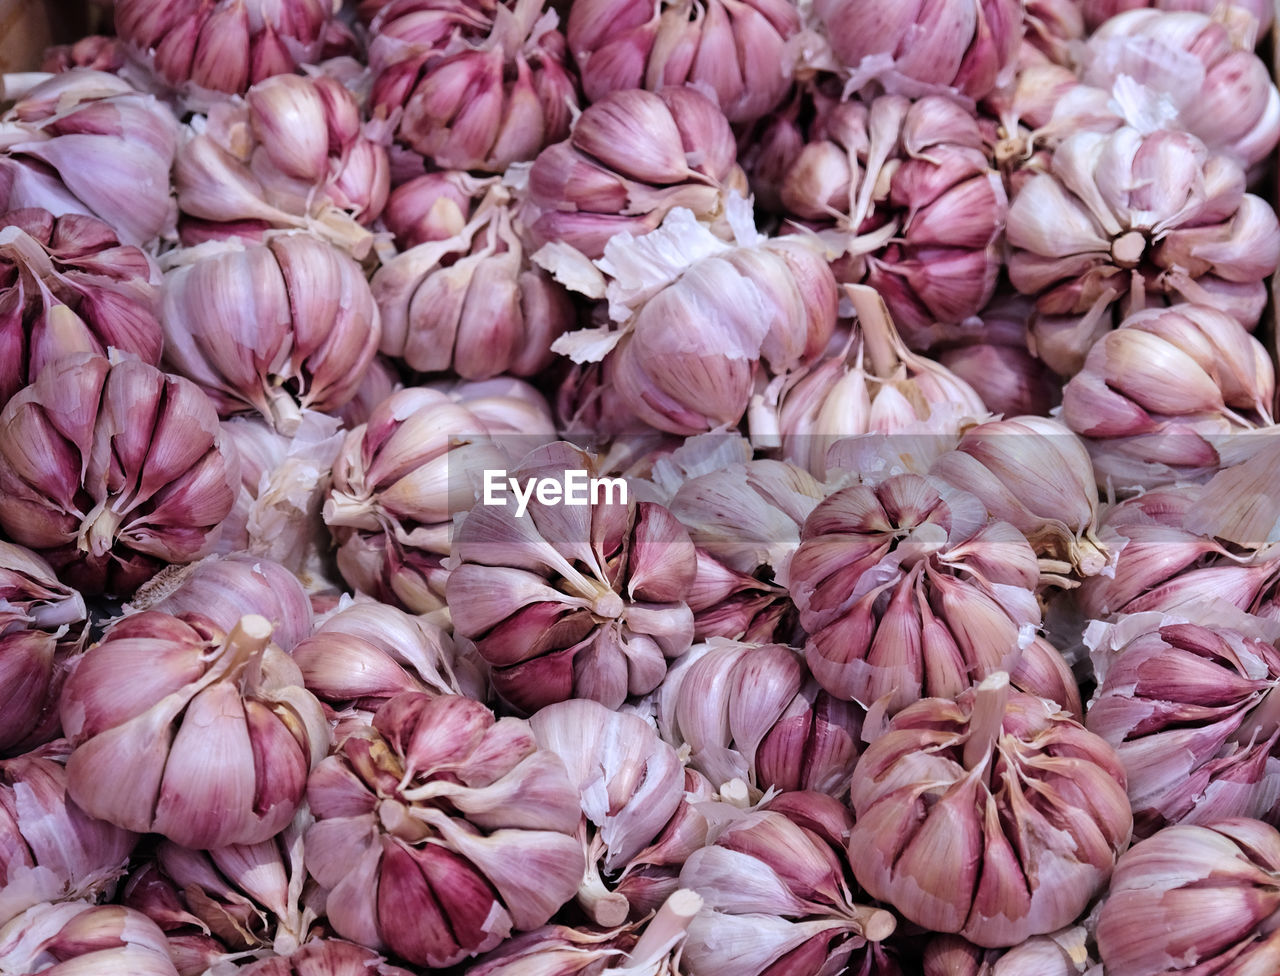 Purple garlic texture background. fresh garlic on market table closeup. pile of purple garlic heads.